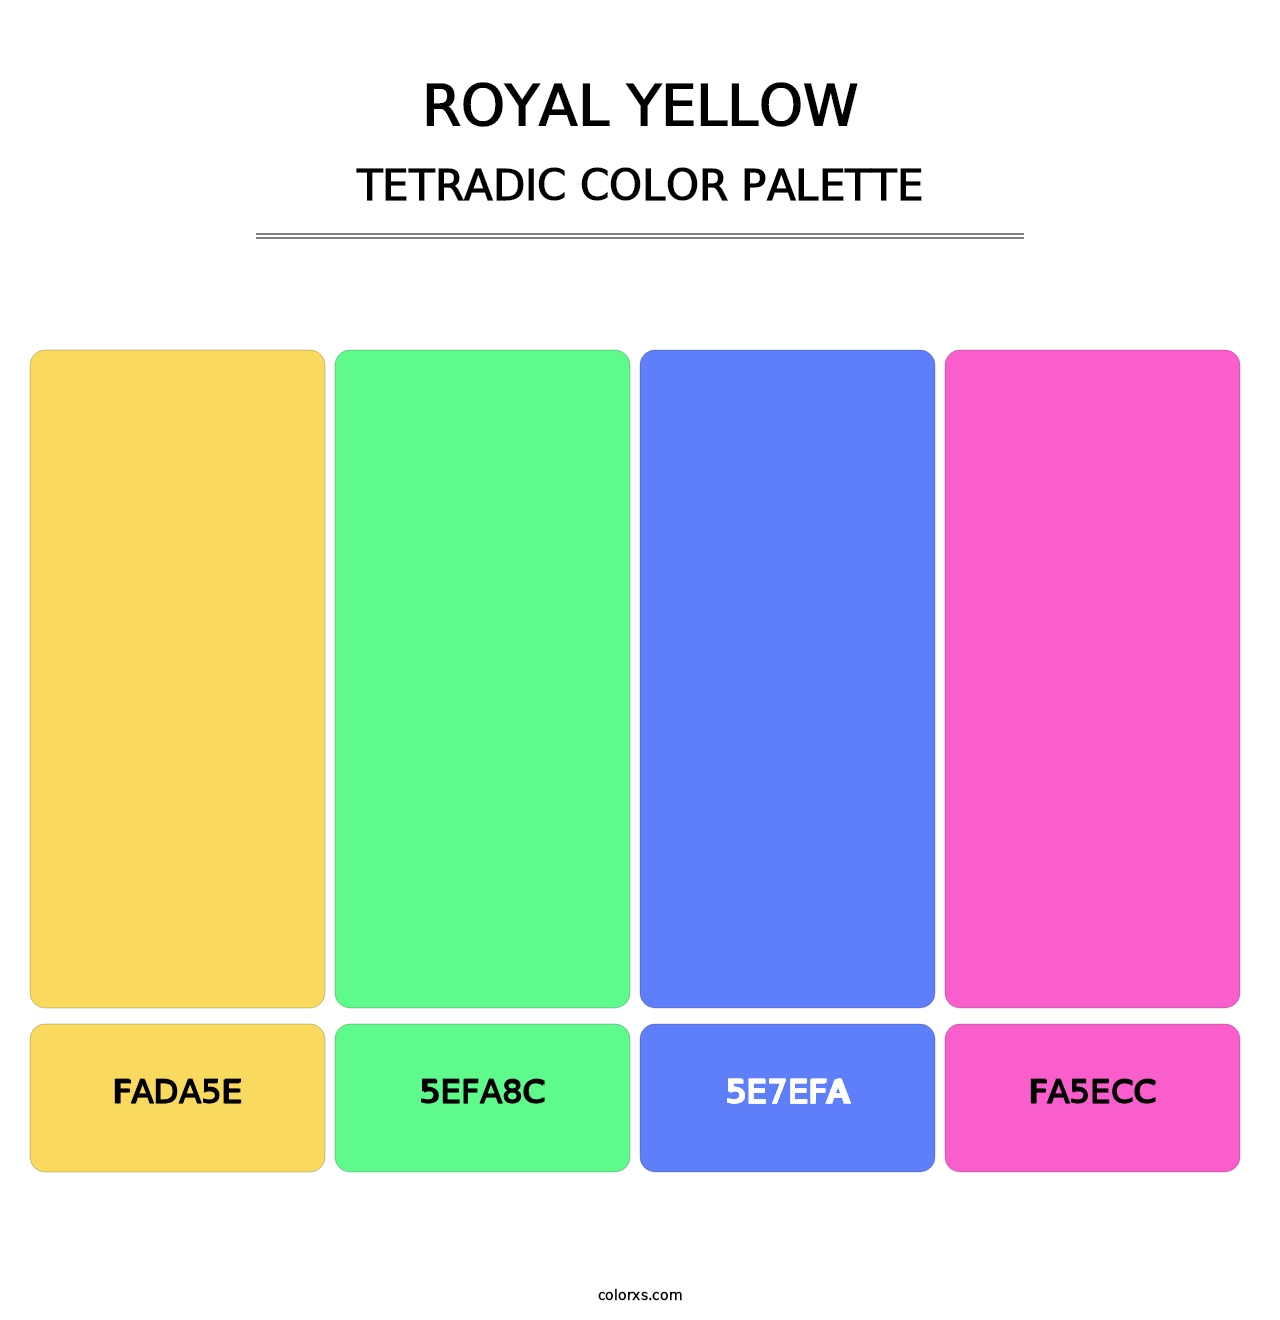 Royal Yellow - Tetradic Color Palette